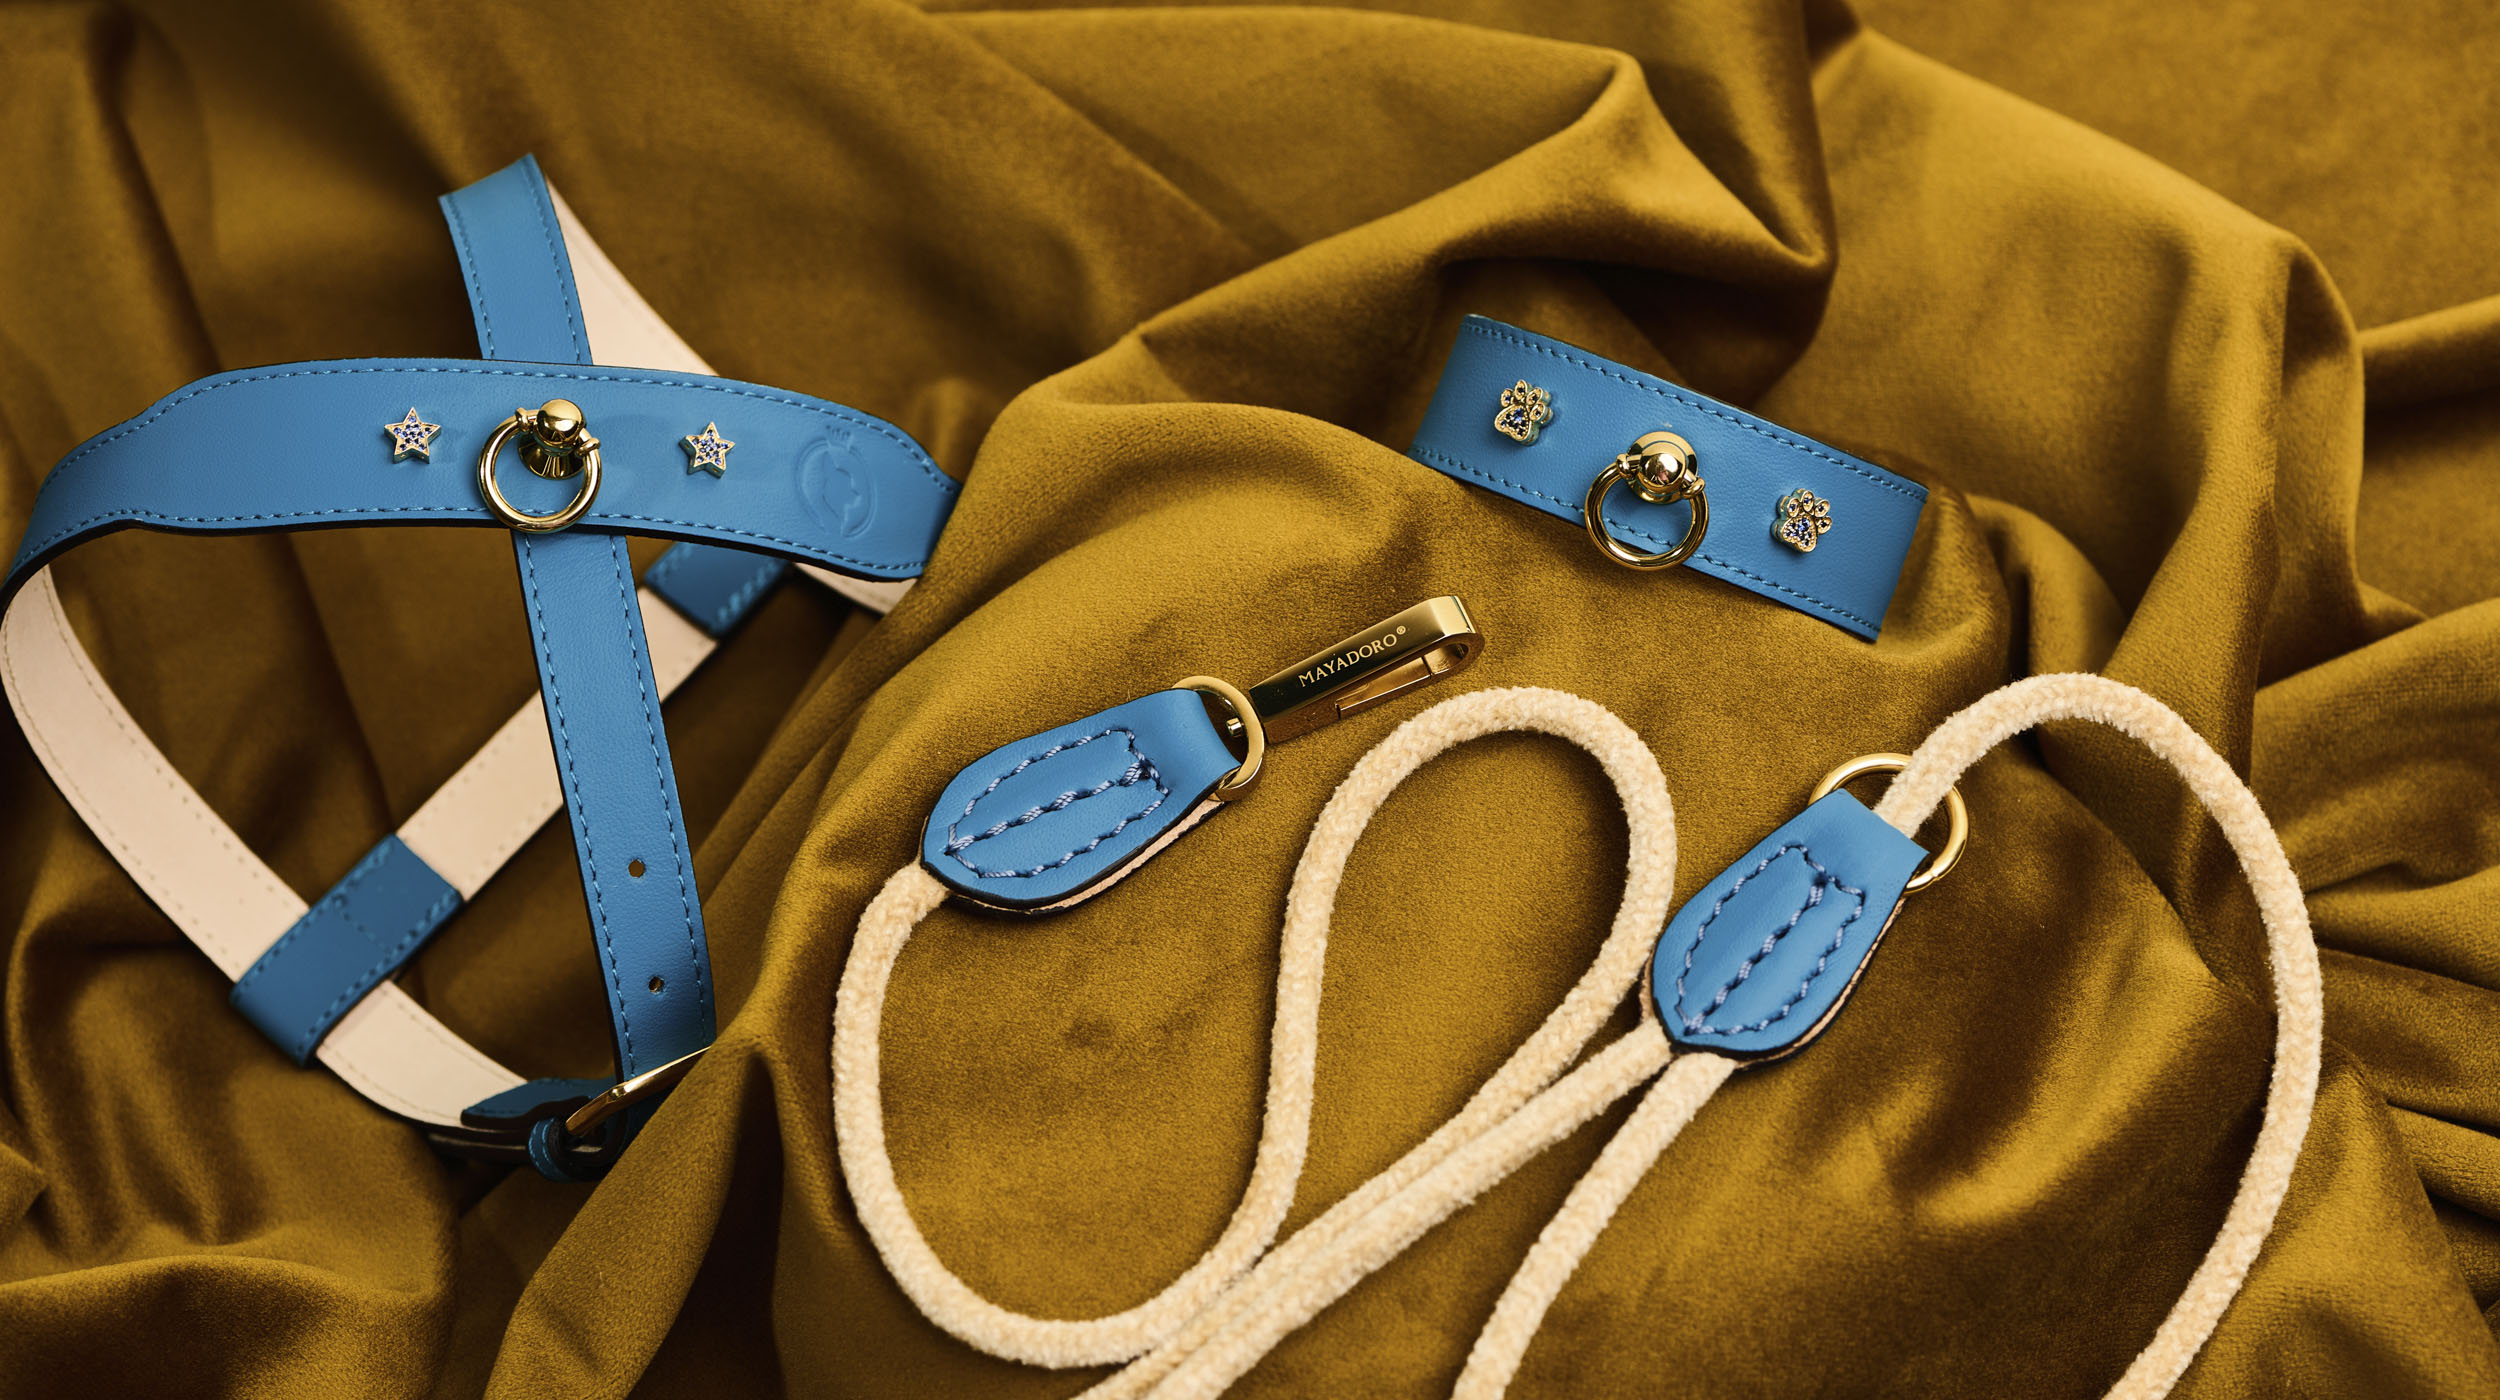 Mayadoro fine jewellery 14ct gold, harness, collar, leash in turquoise